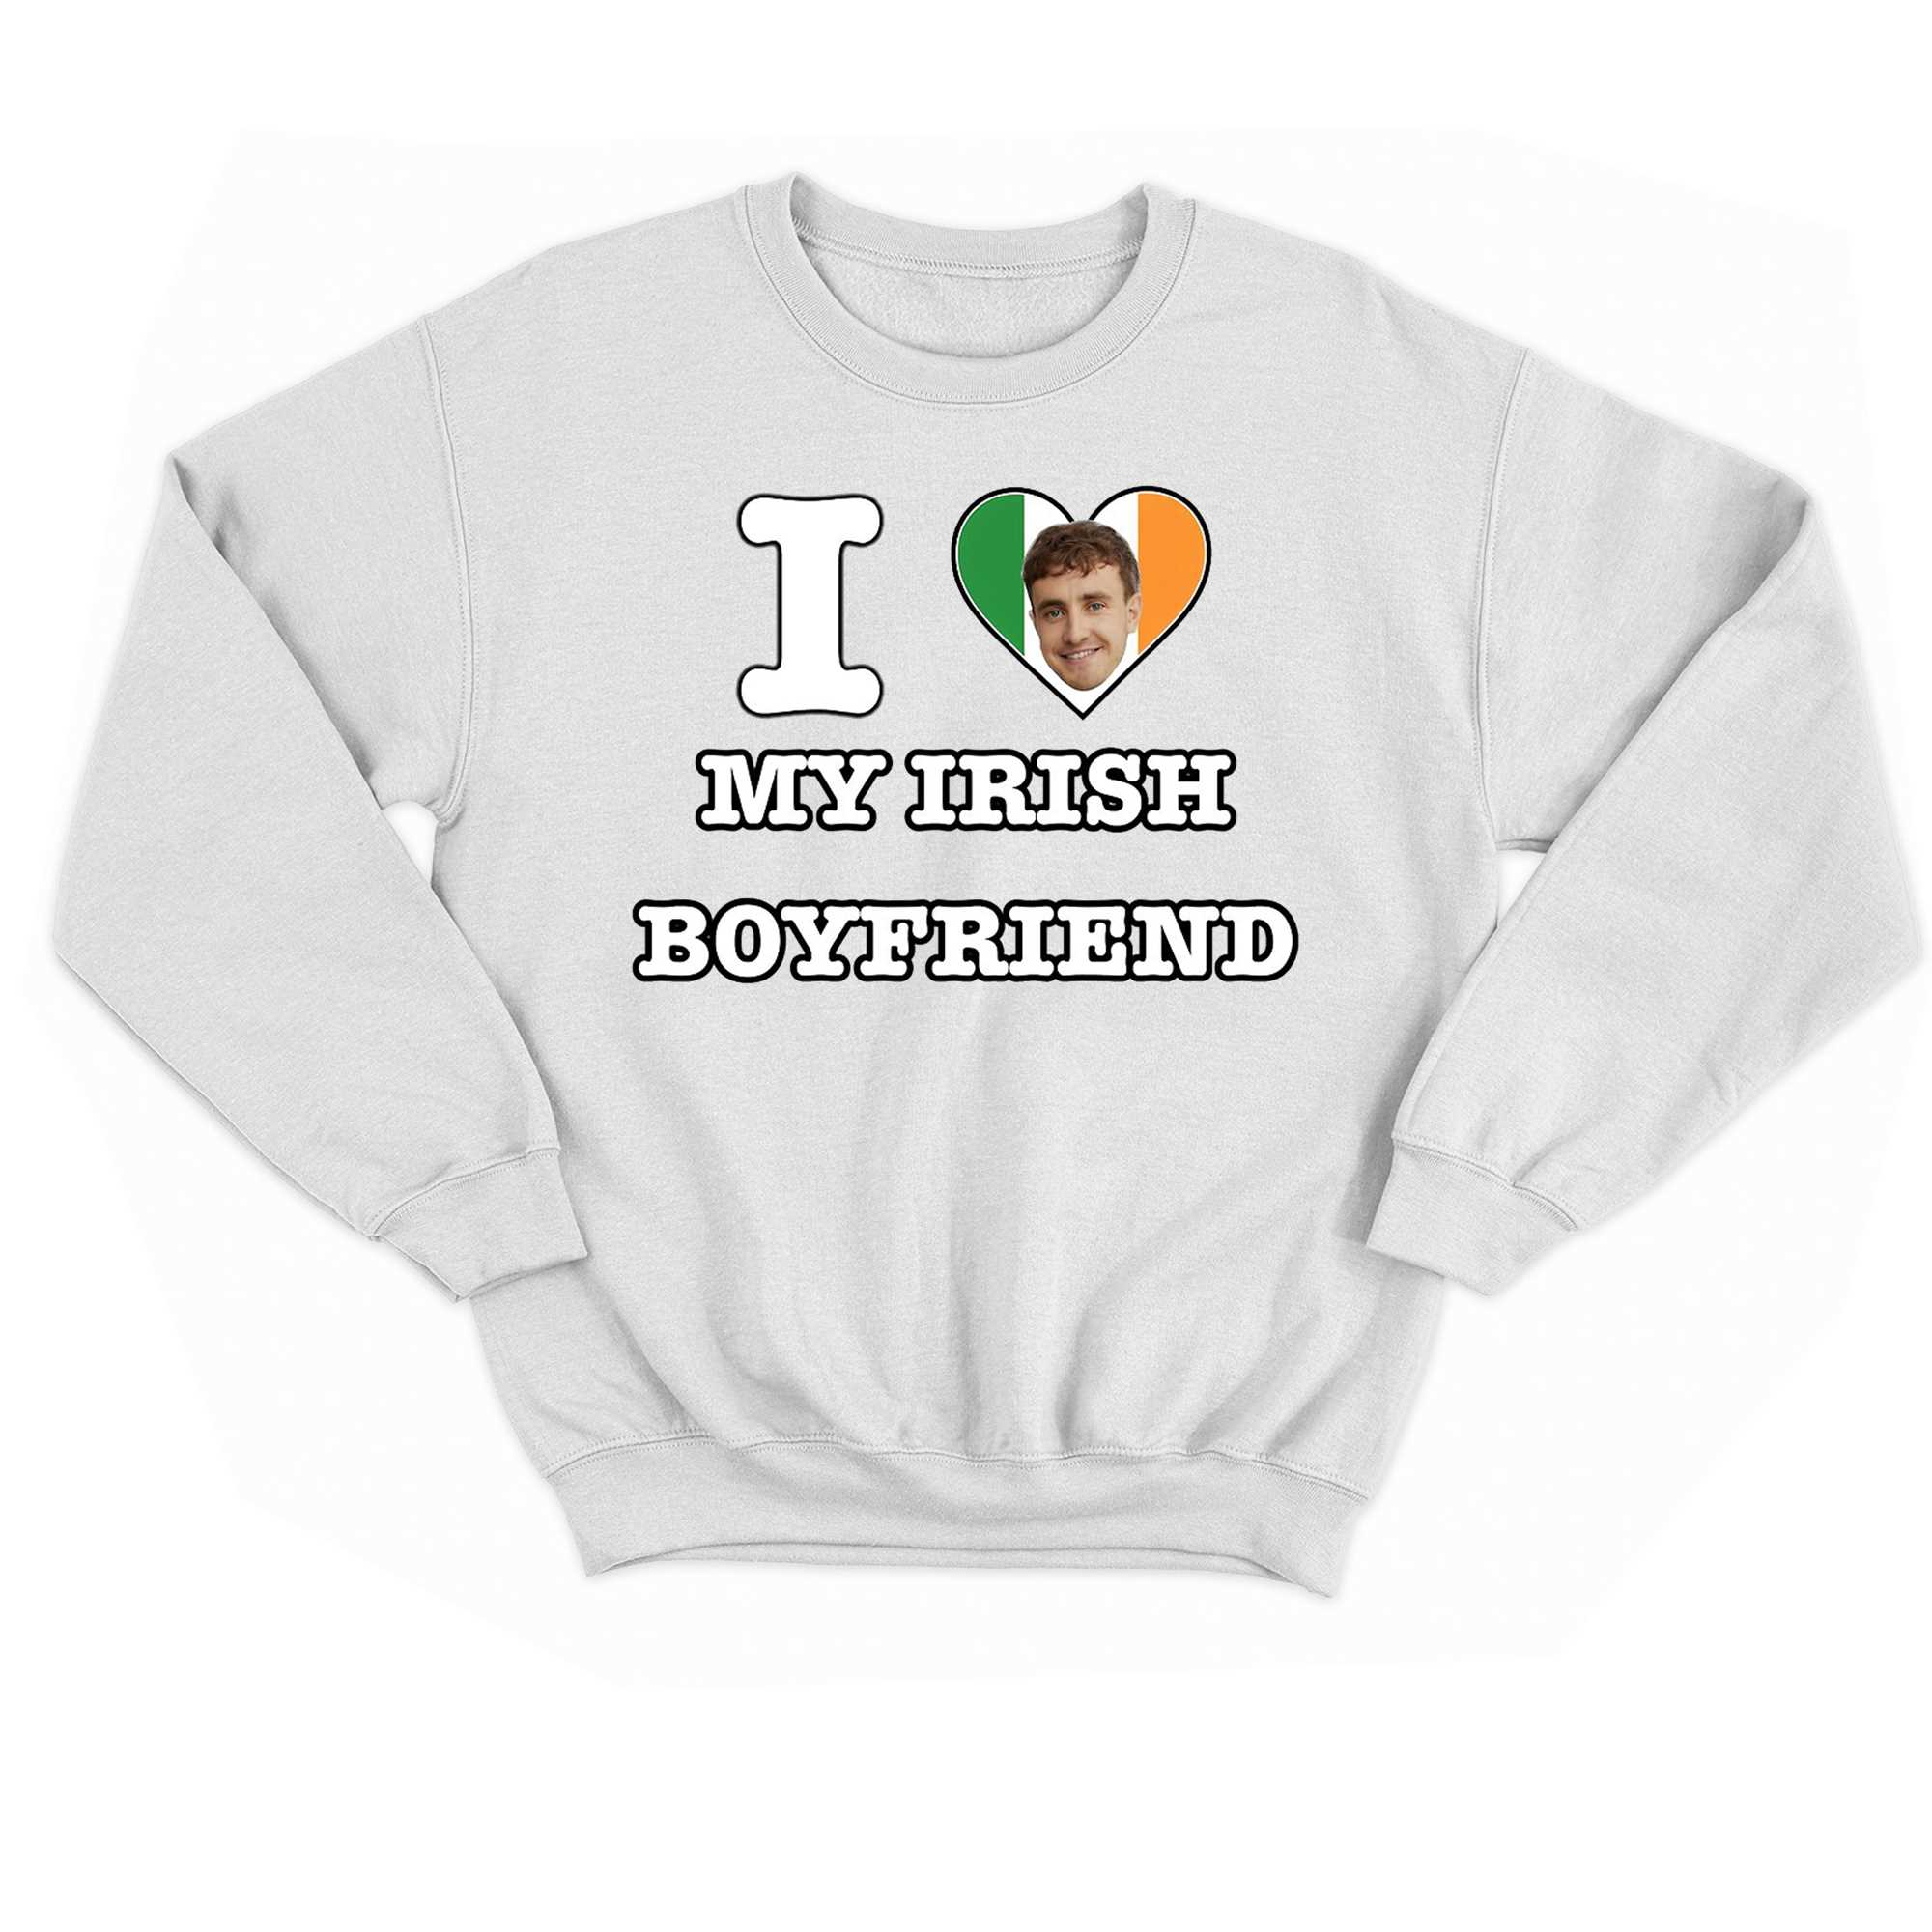 Paul Mescal Irish Boyfriend T-shirt 